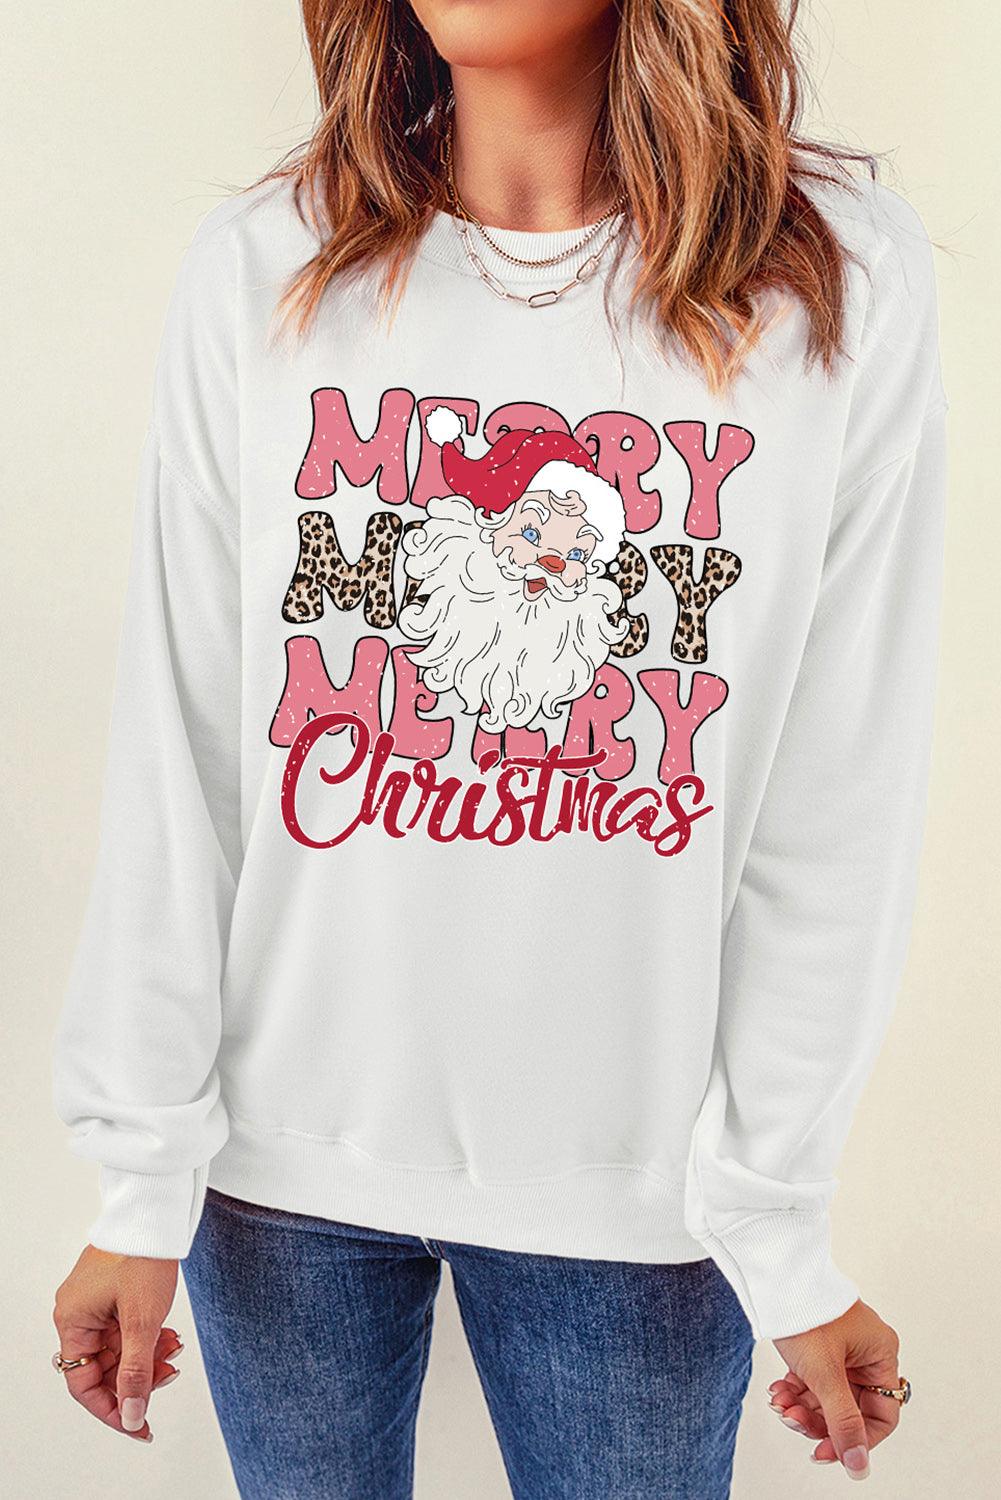 Beige MERRY Christmas Santa Claus Print Crewneck Sweatshirt - L & M Kee, LLC